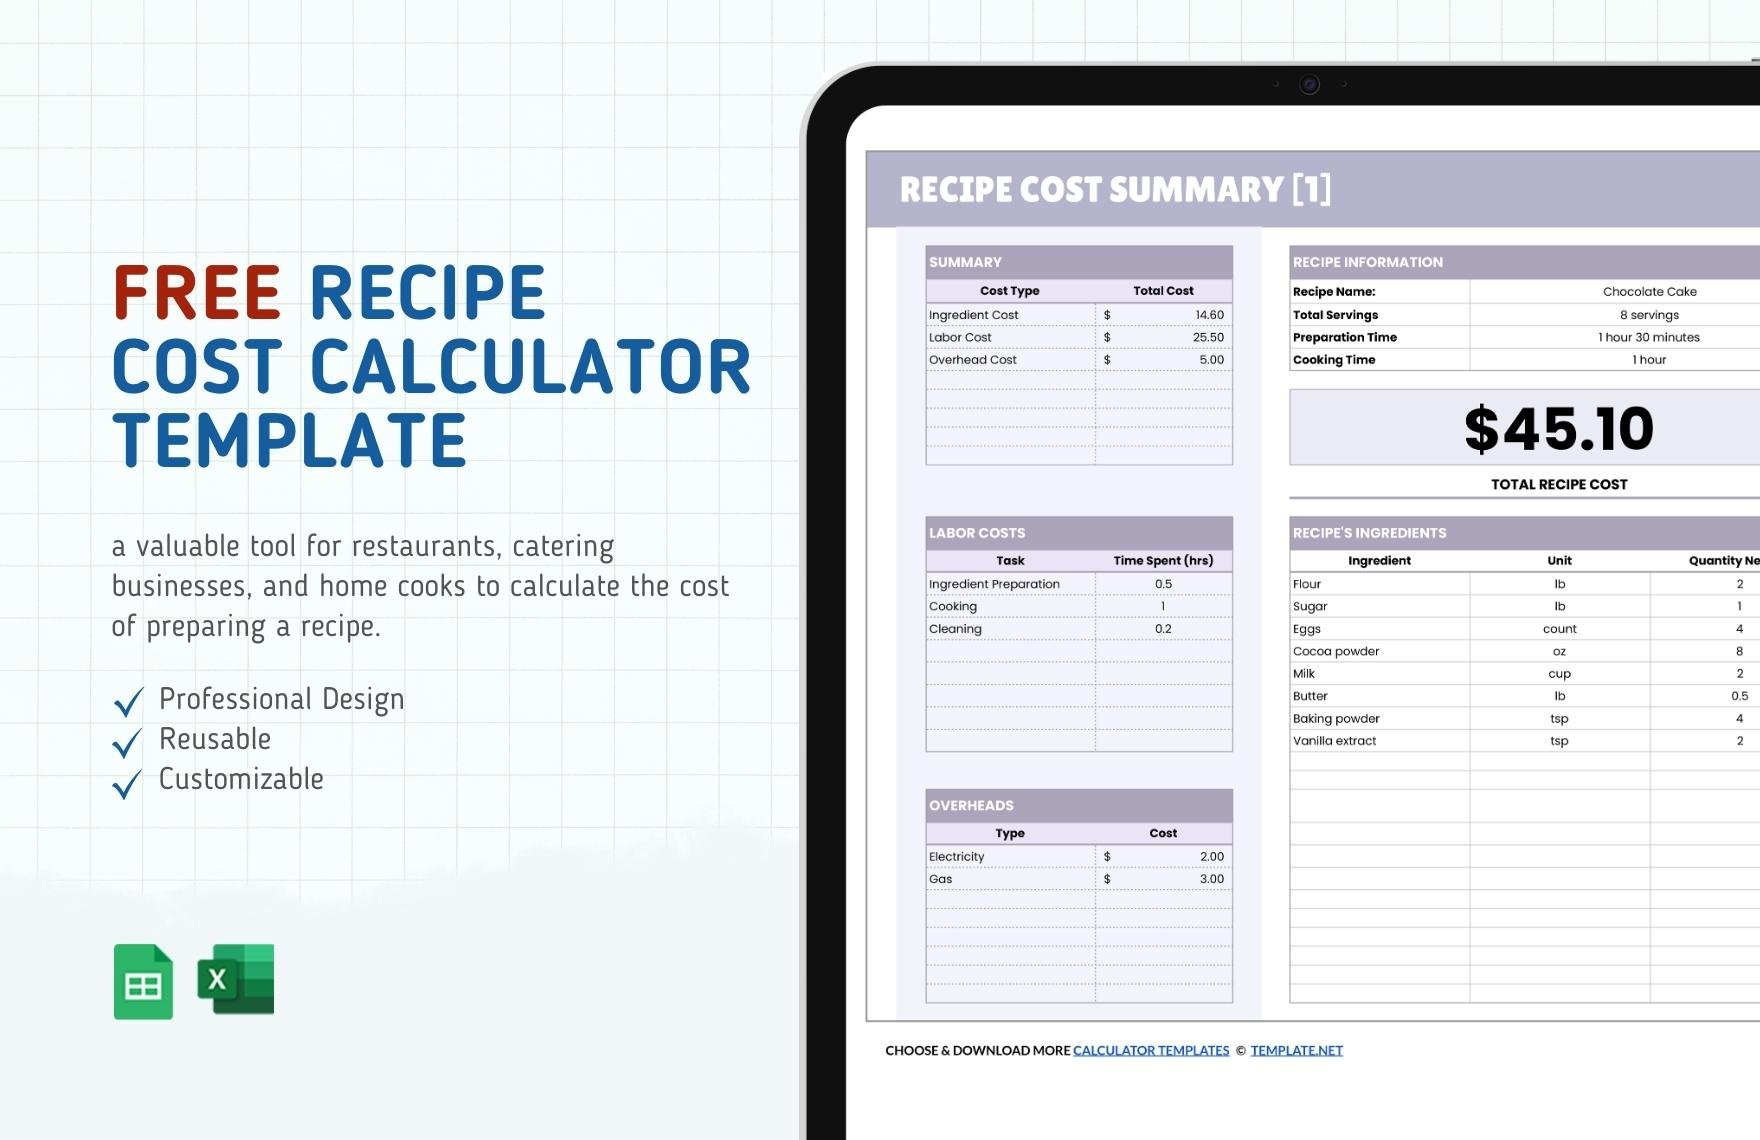 Recipe Cost Calculator Template